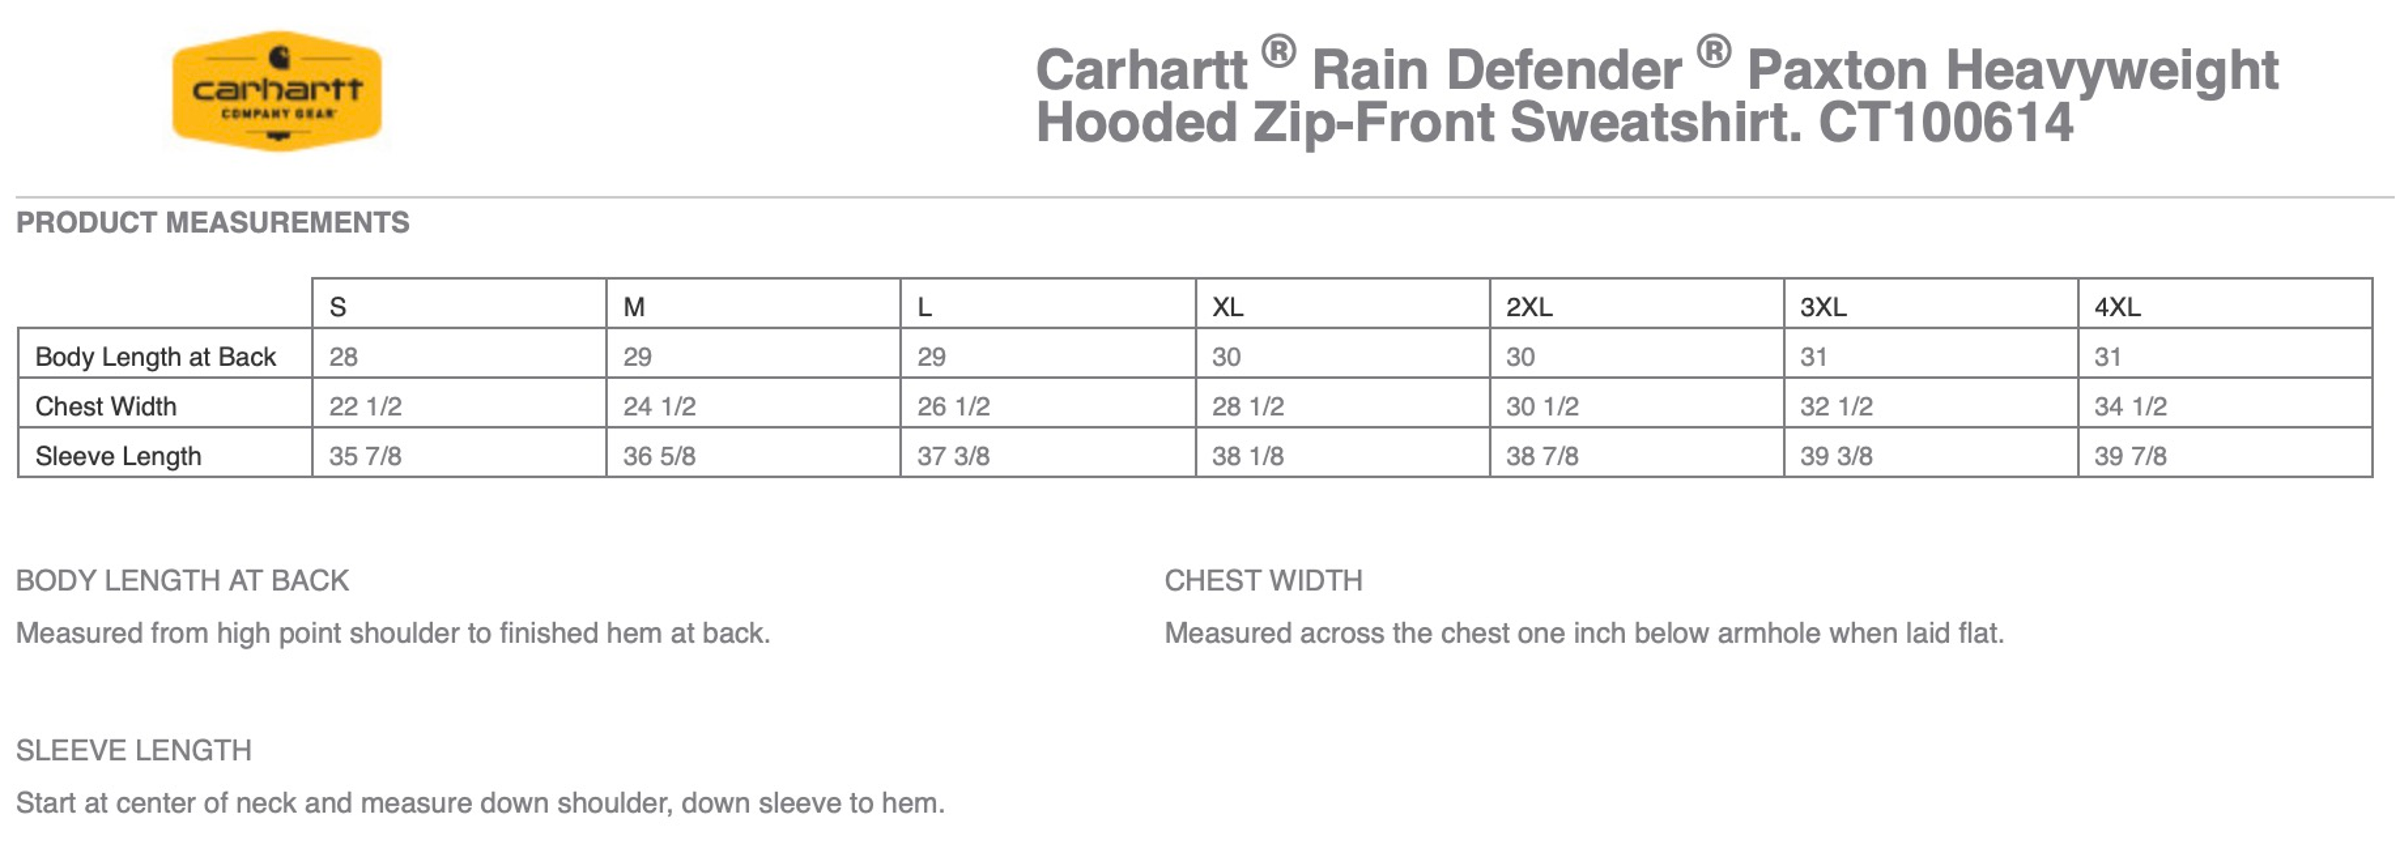 Marblehead Softball League Carhartt Midweight Full Zip